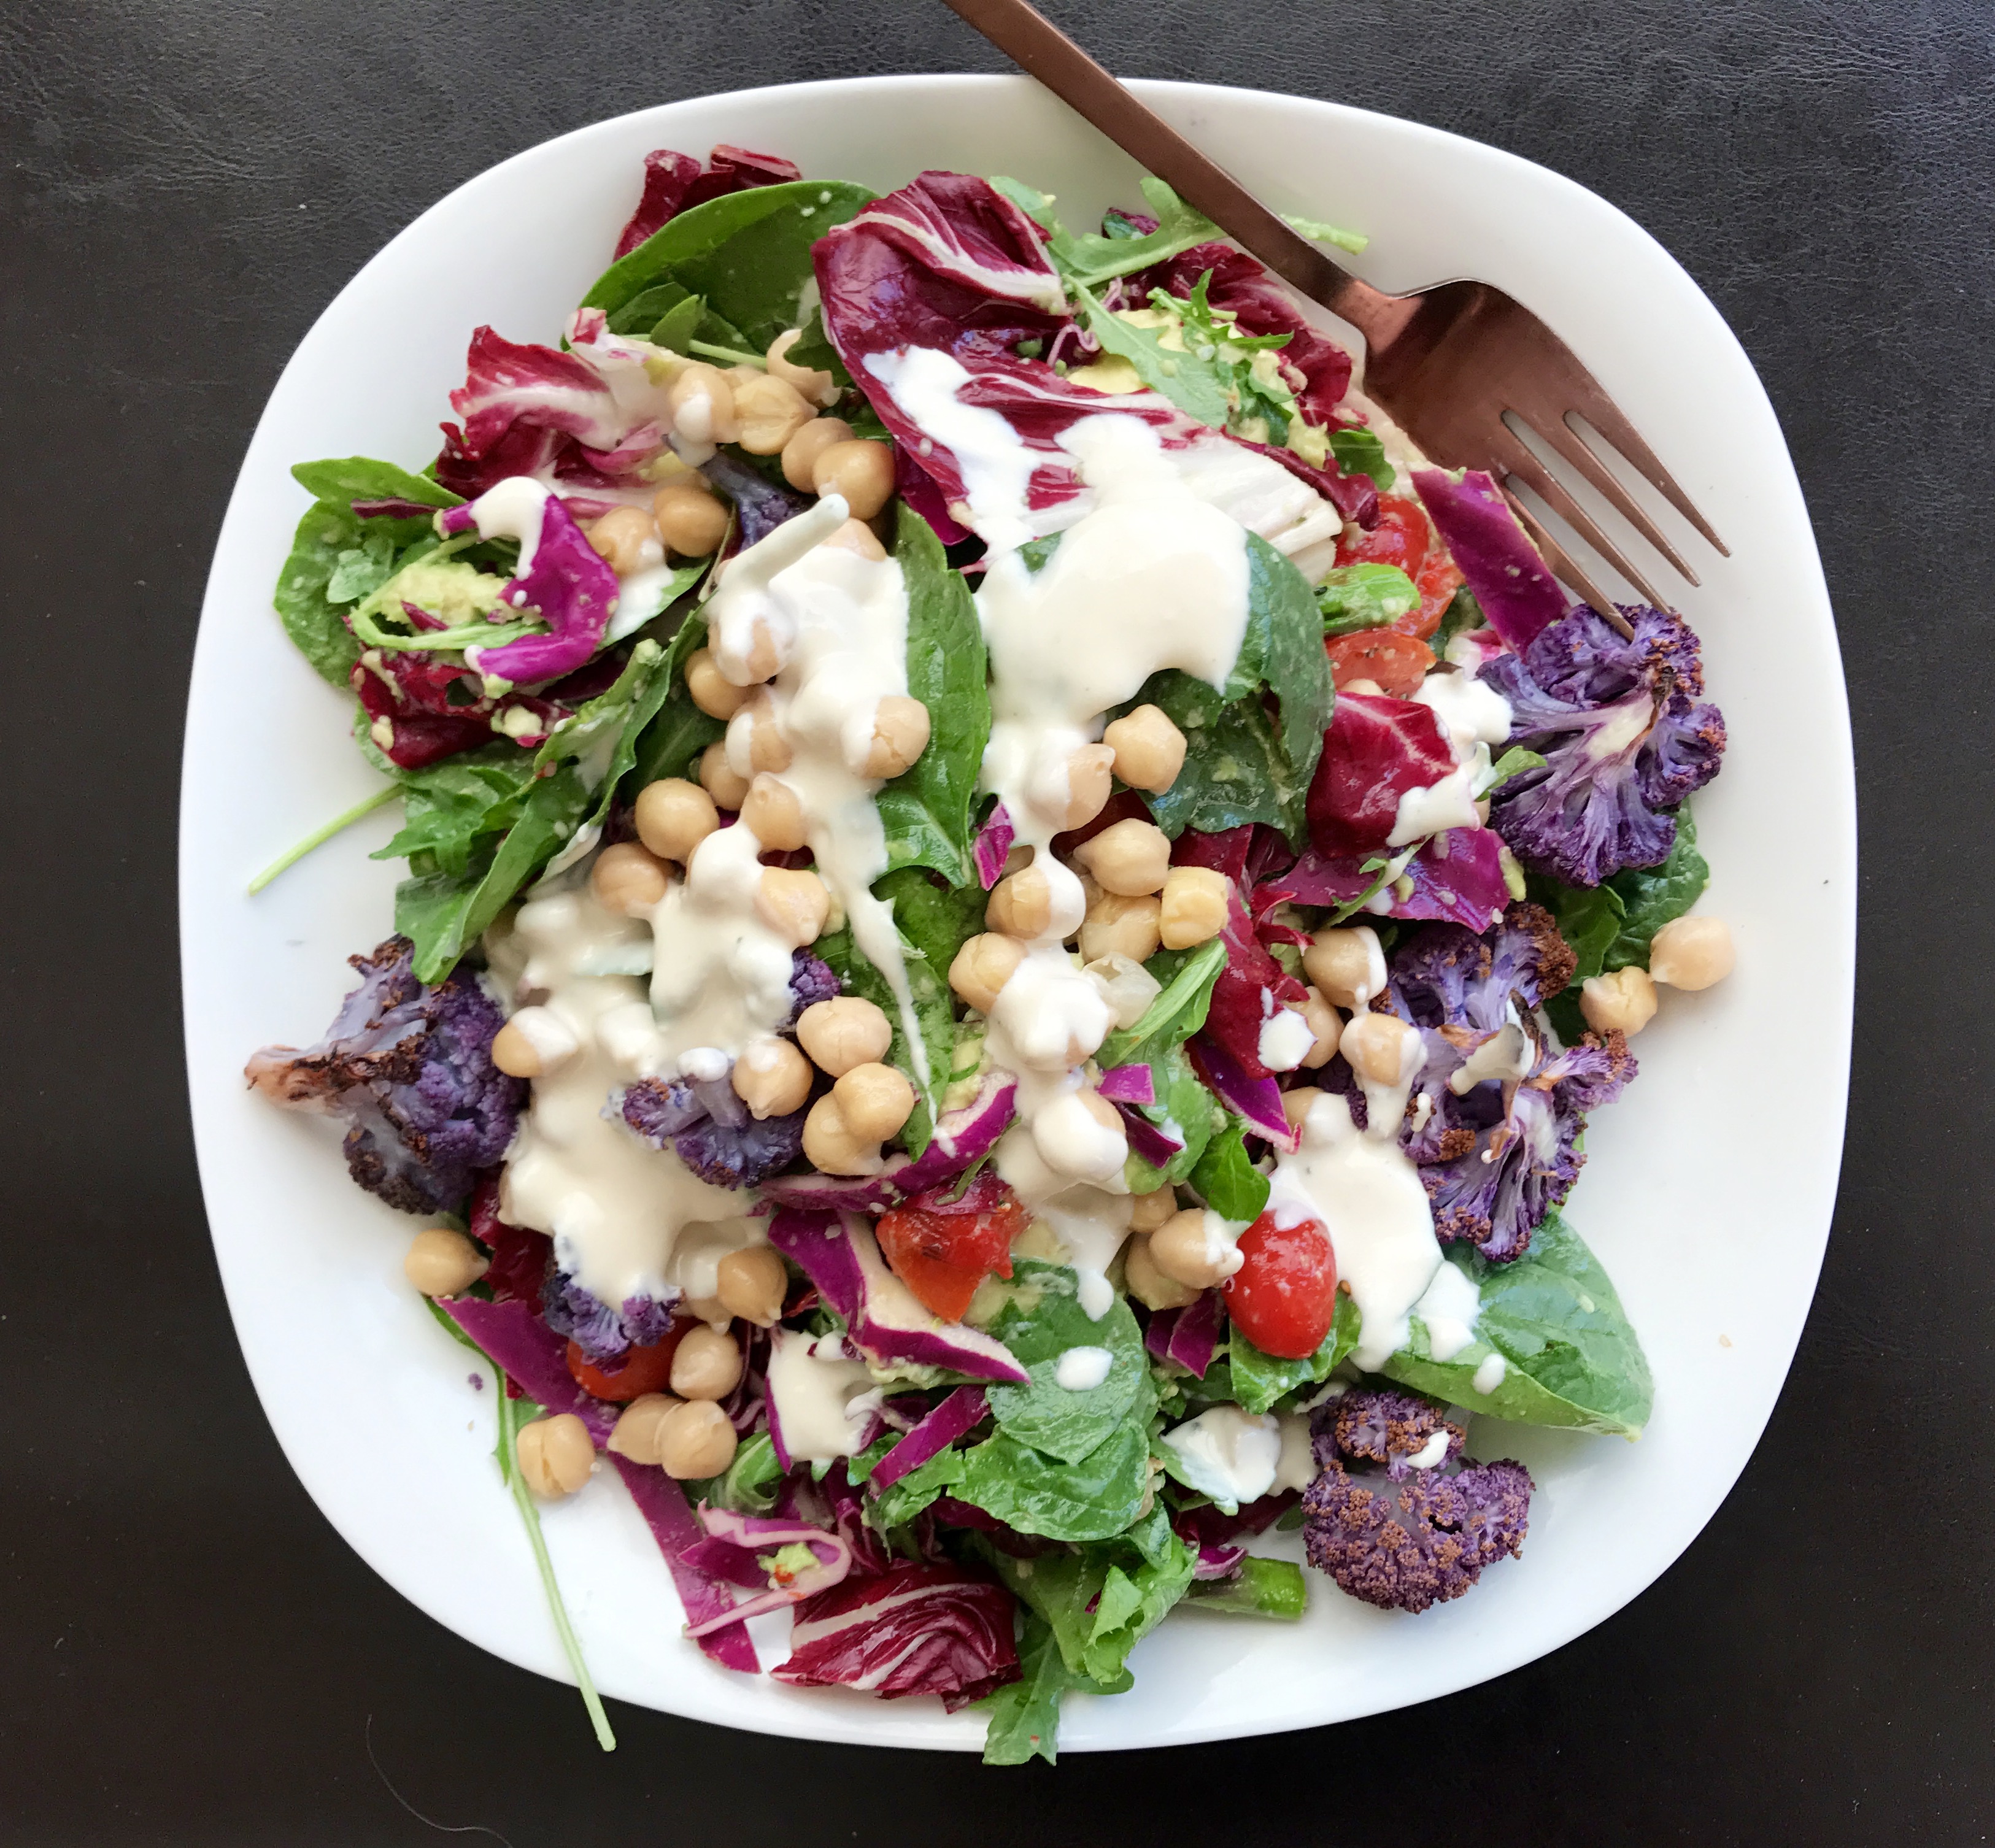 Spinach & Purple Cauliflower Salad with Creamy Yogurt Dressing